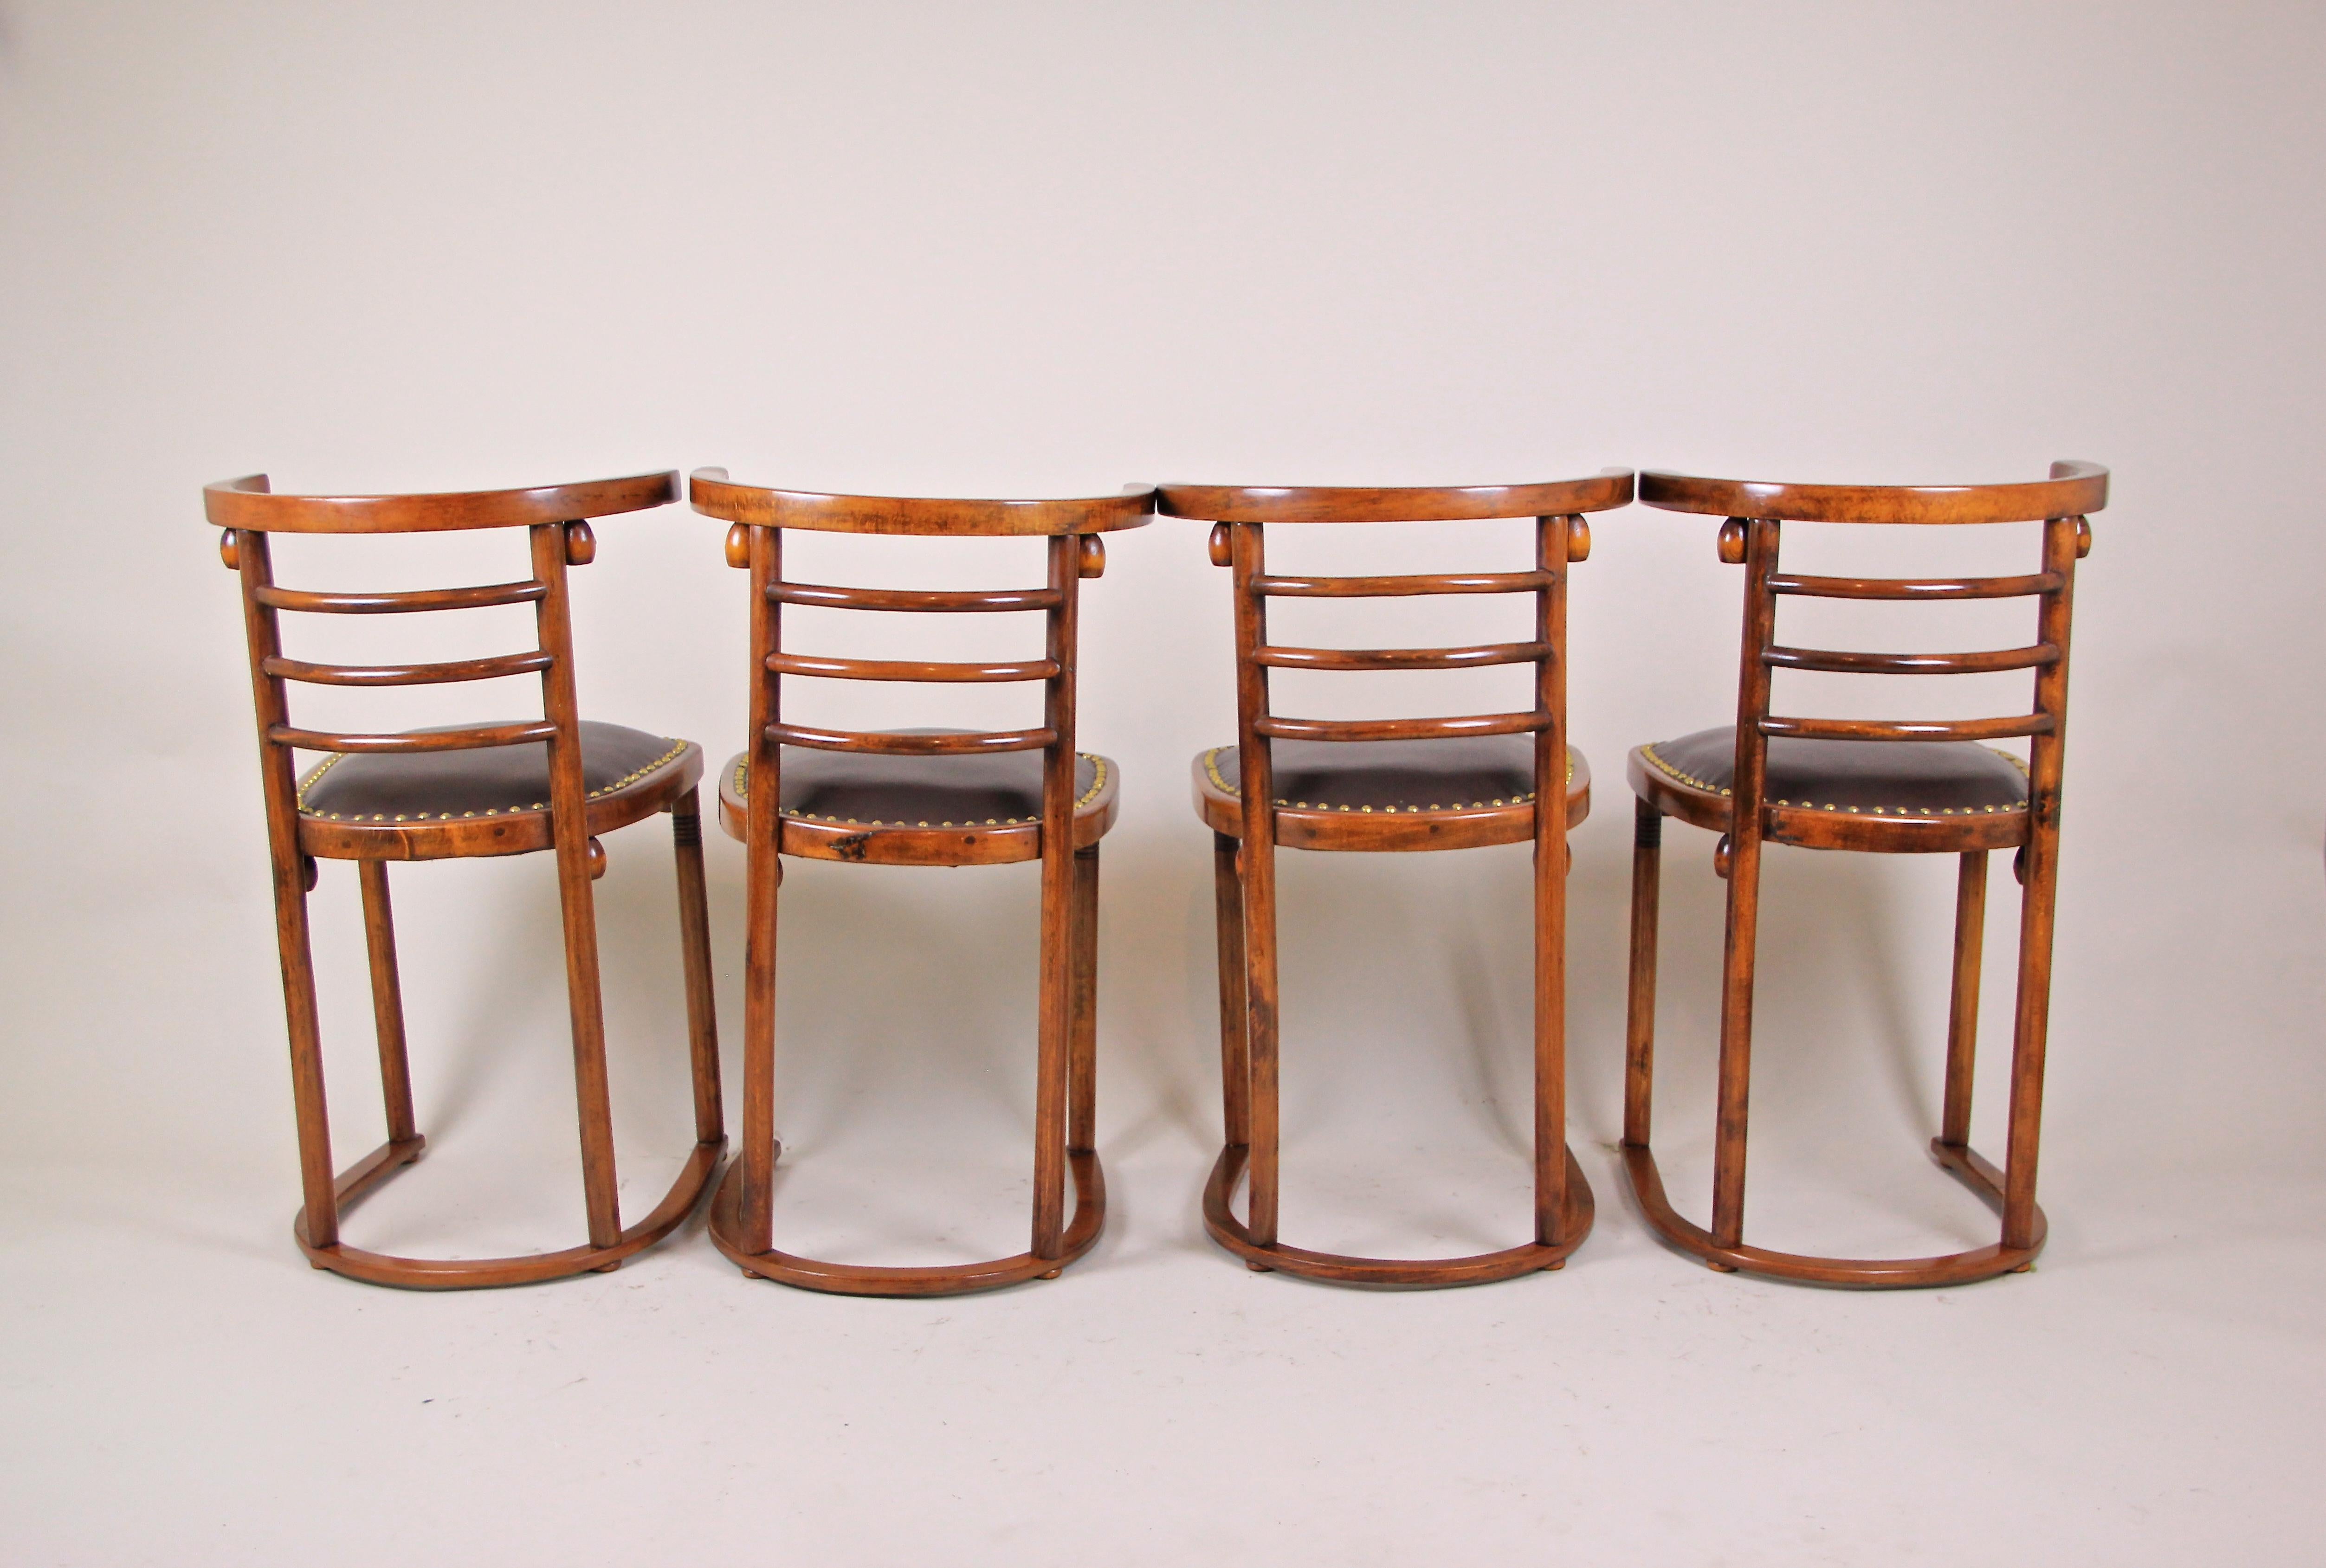 20th Century Set of Fledermaus Chairs by J. Hoffmann & Thonet Coffee Table, Austria, ca. 1907